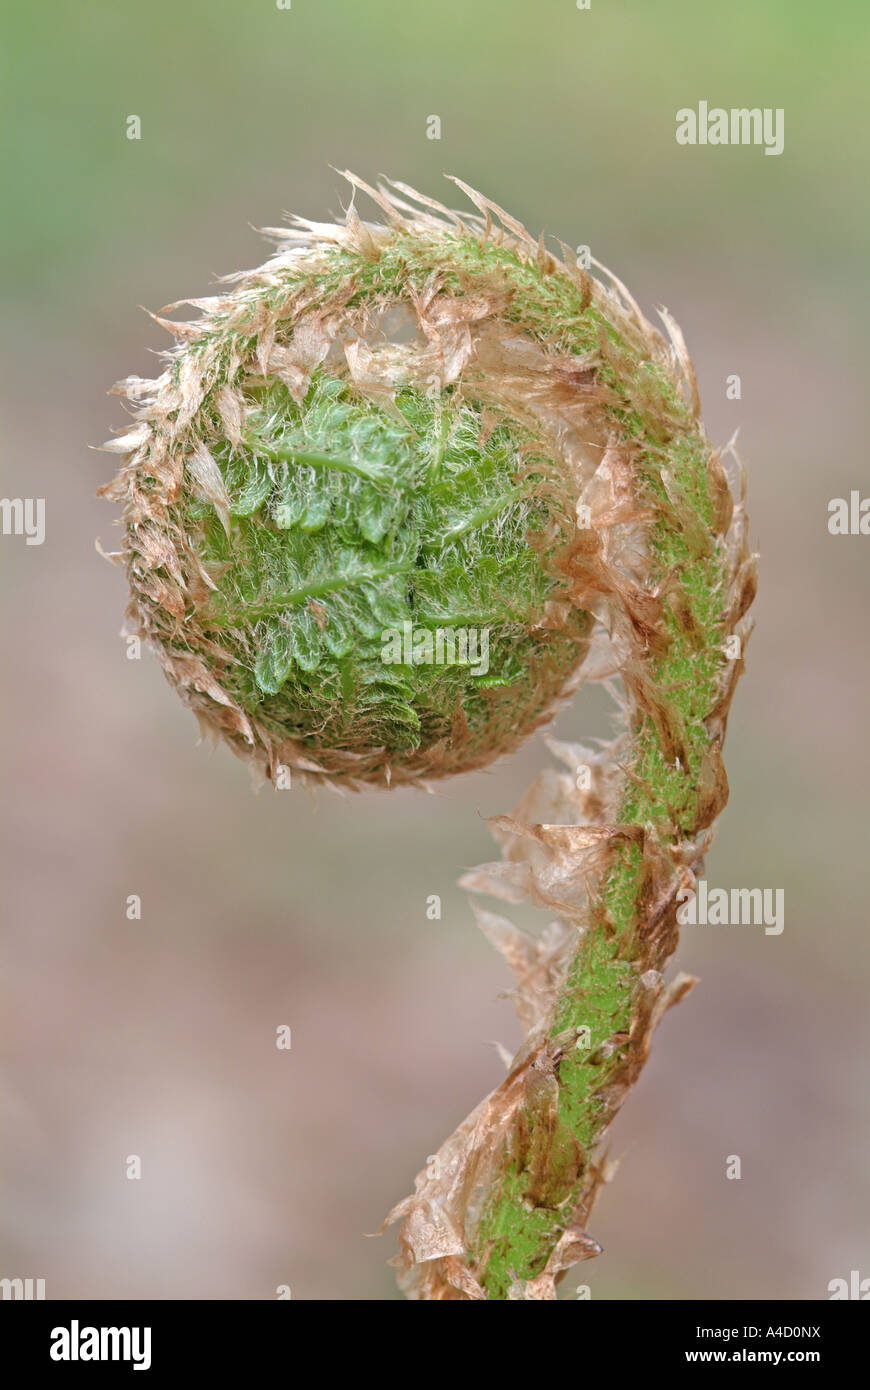 Male Fern (Dryopteris filix-mas), growing fronds. Austria, April Stock Photo